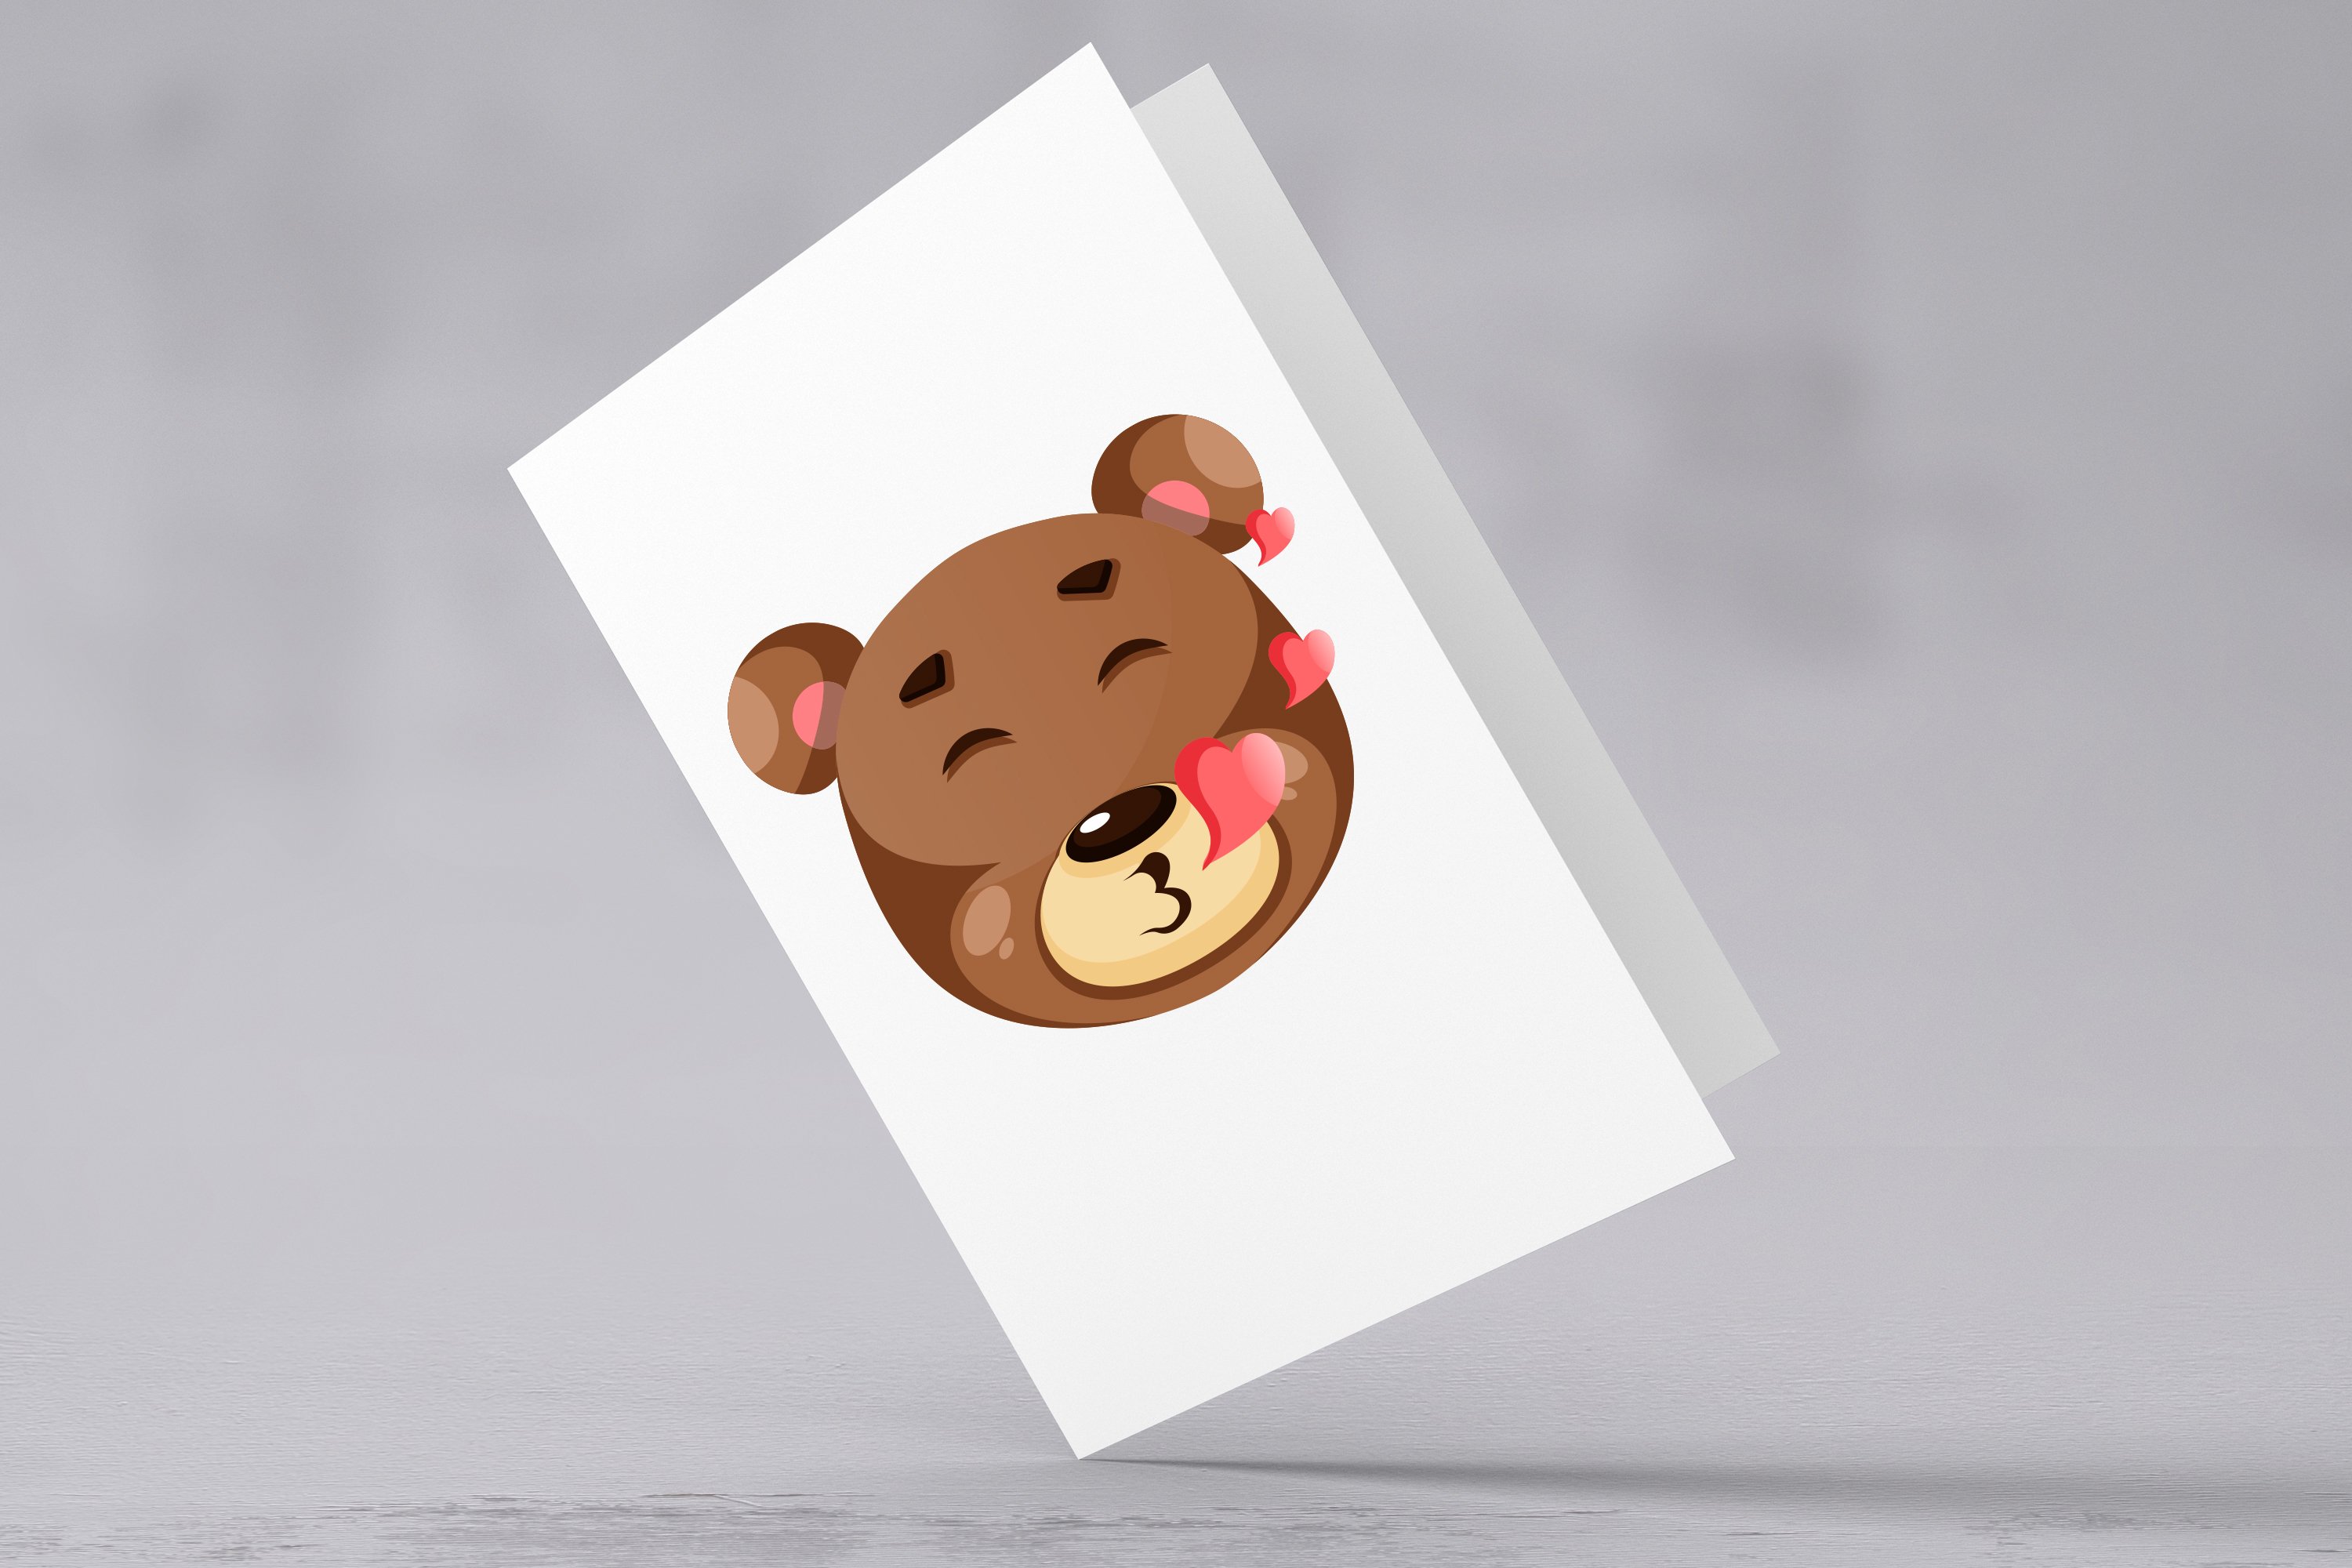 Image postcard with cheerful emoji face bear.